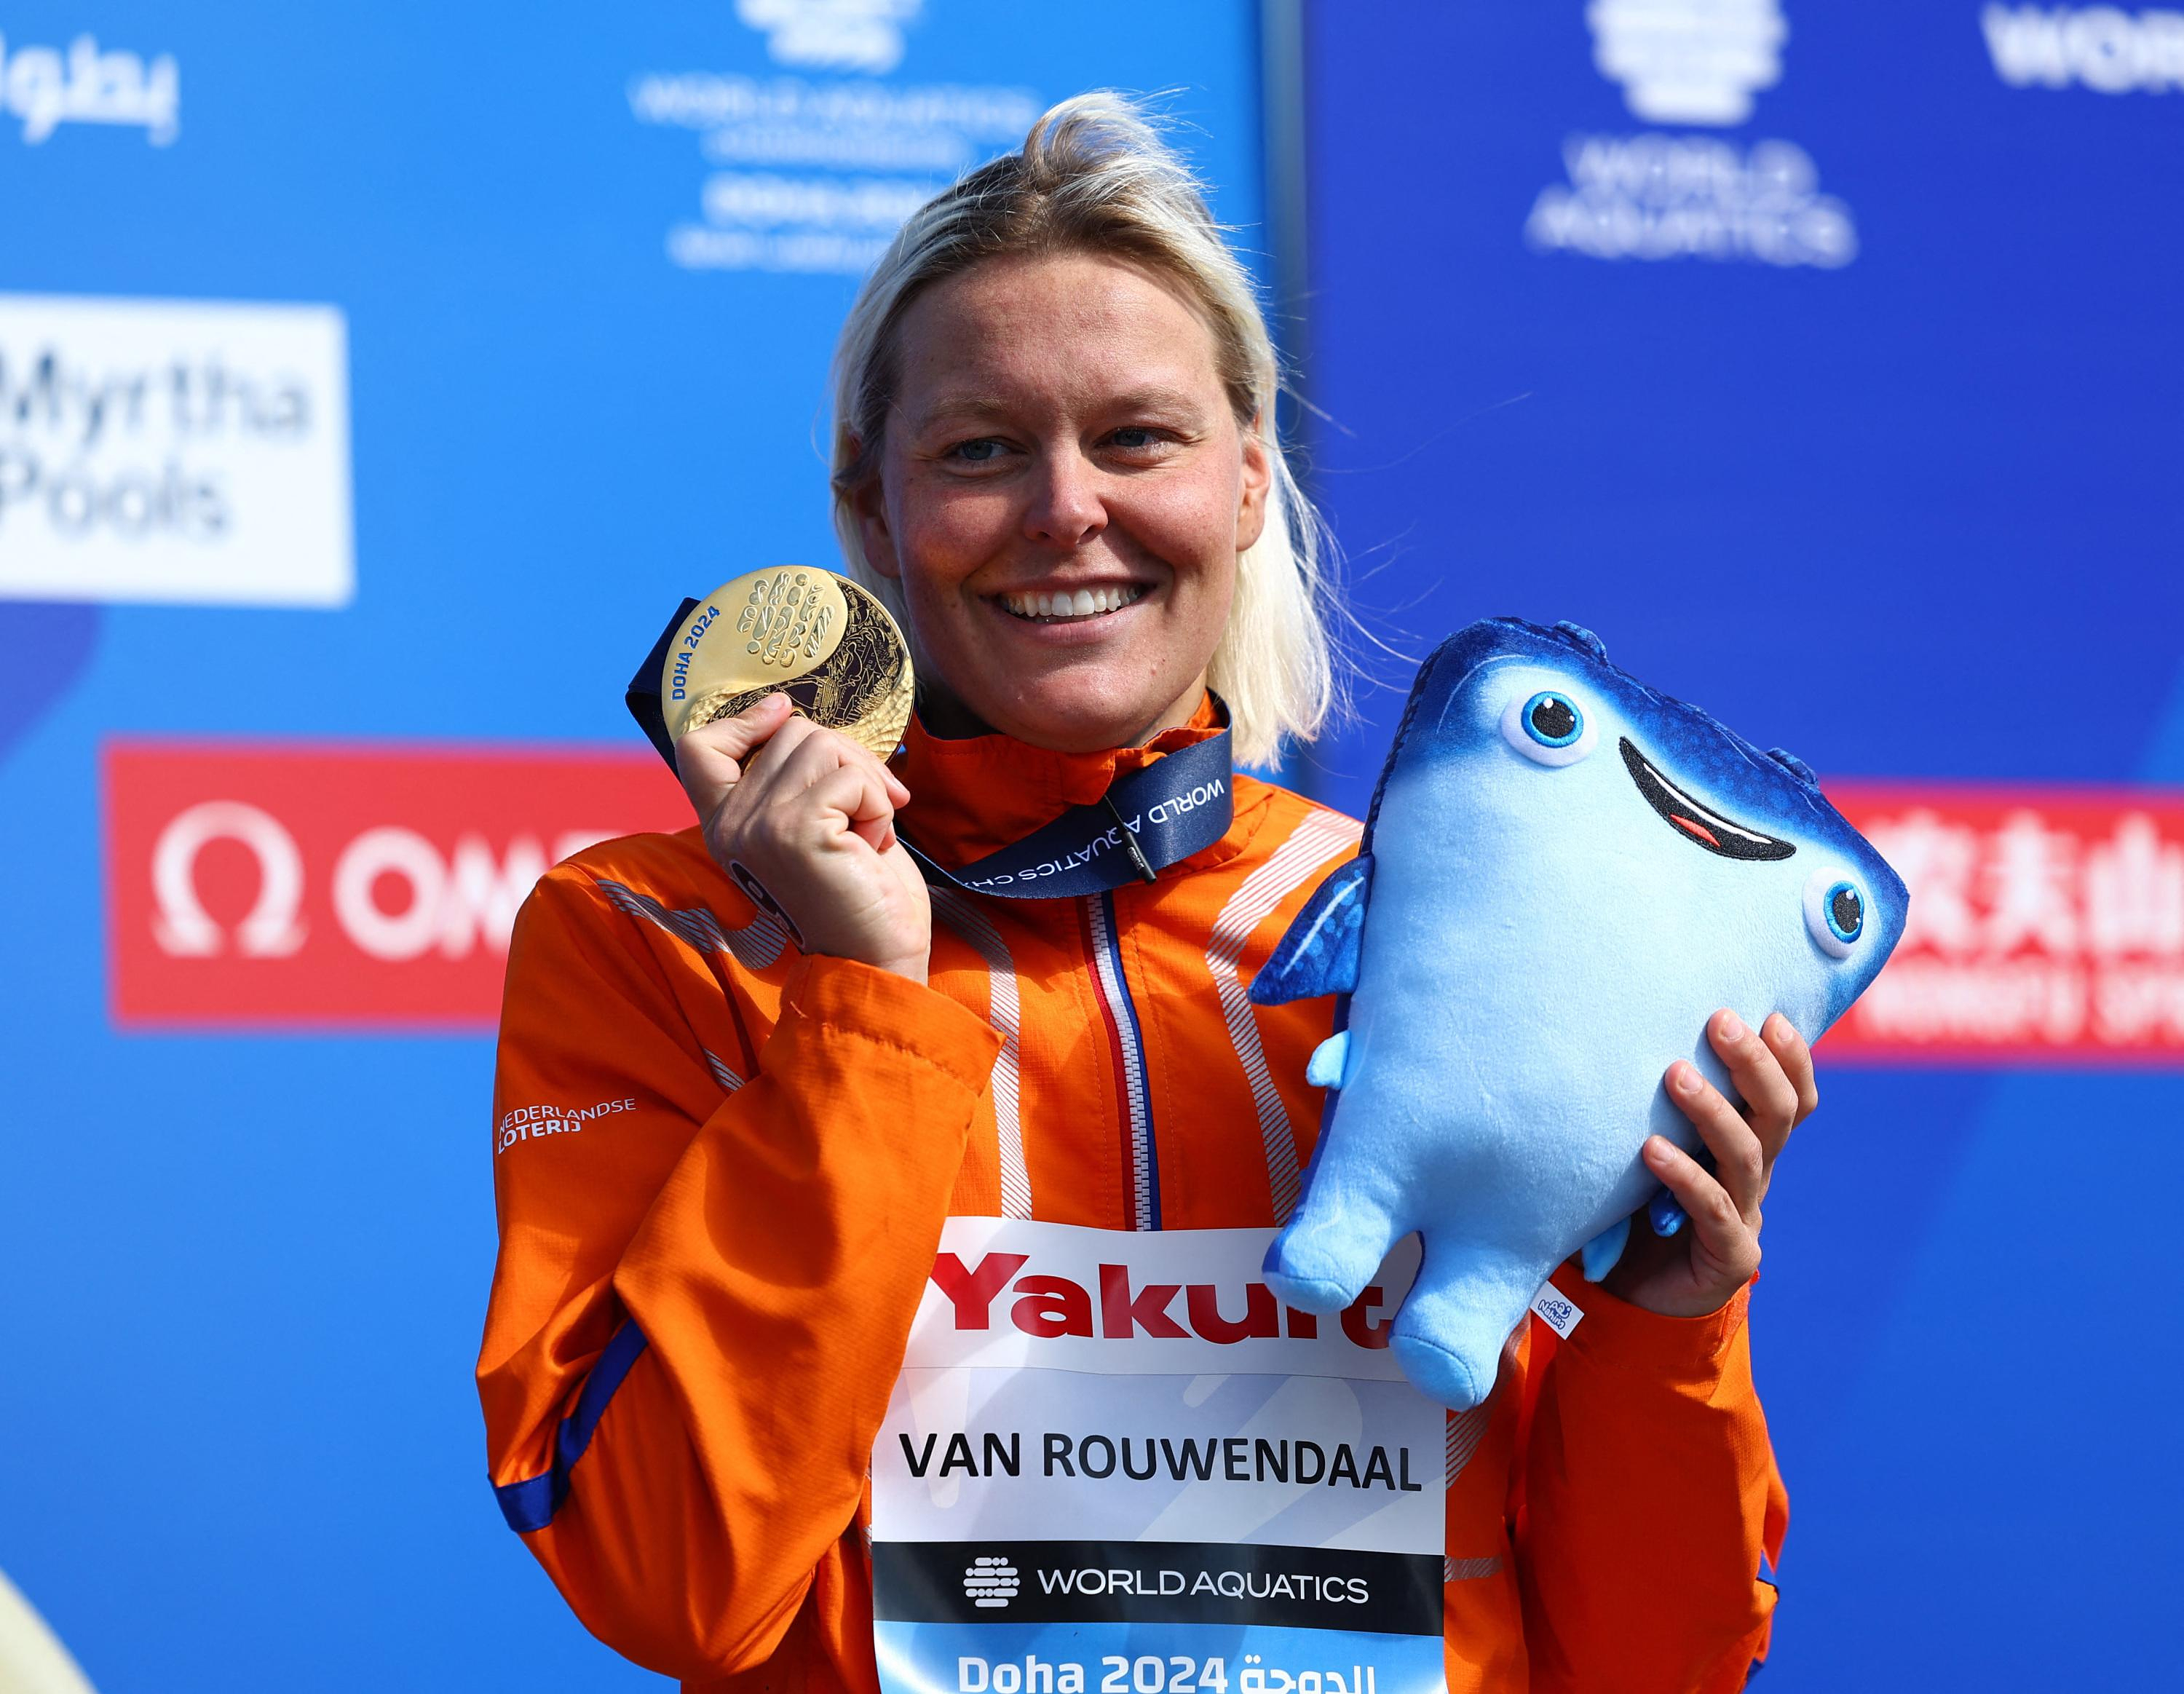 Swimming: Dutchwoman Van Rouwendaal wins 10km world title